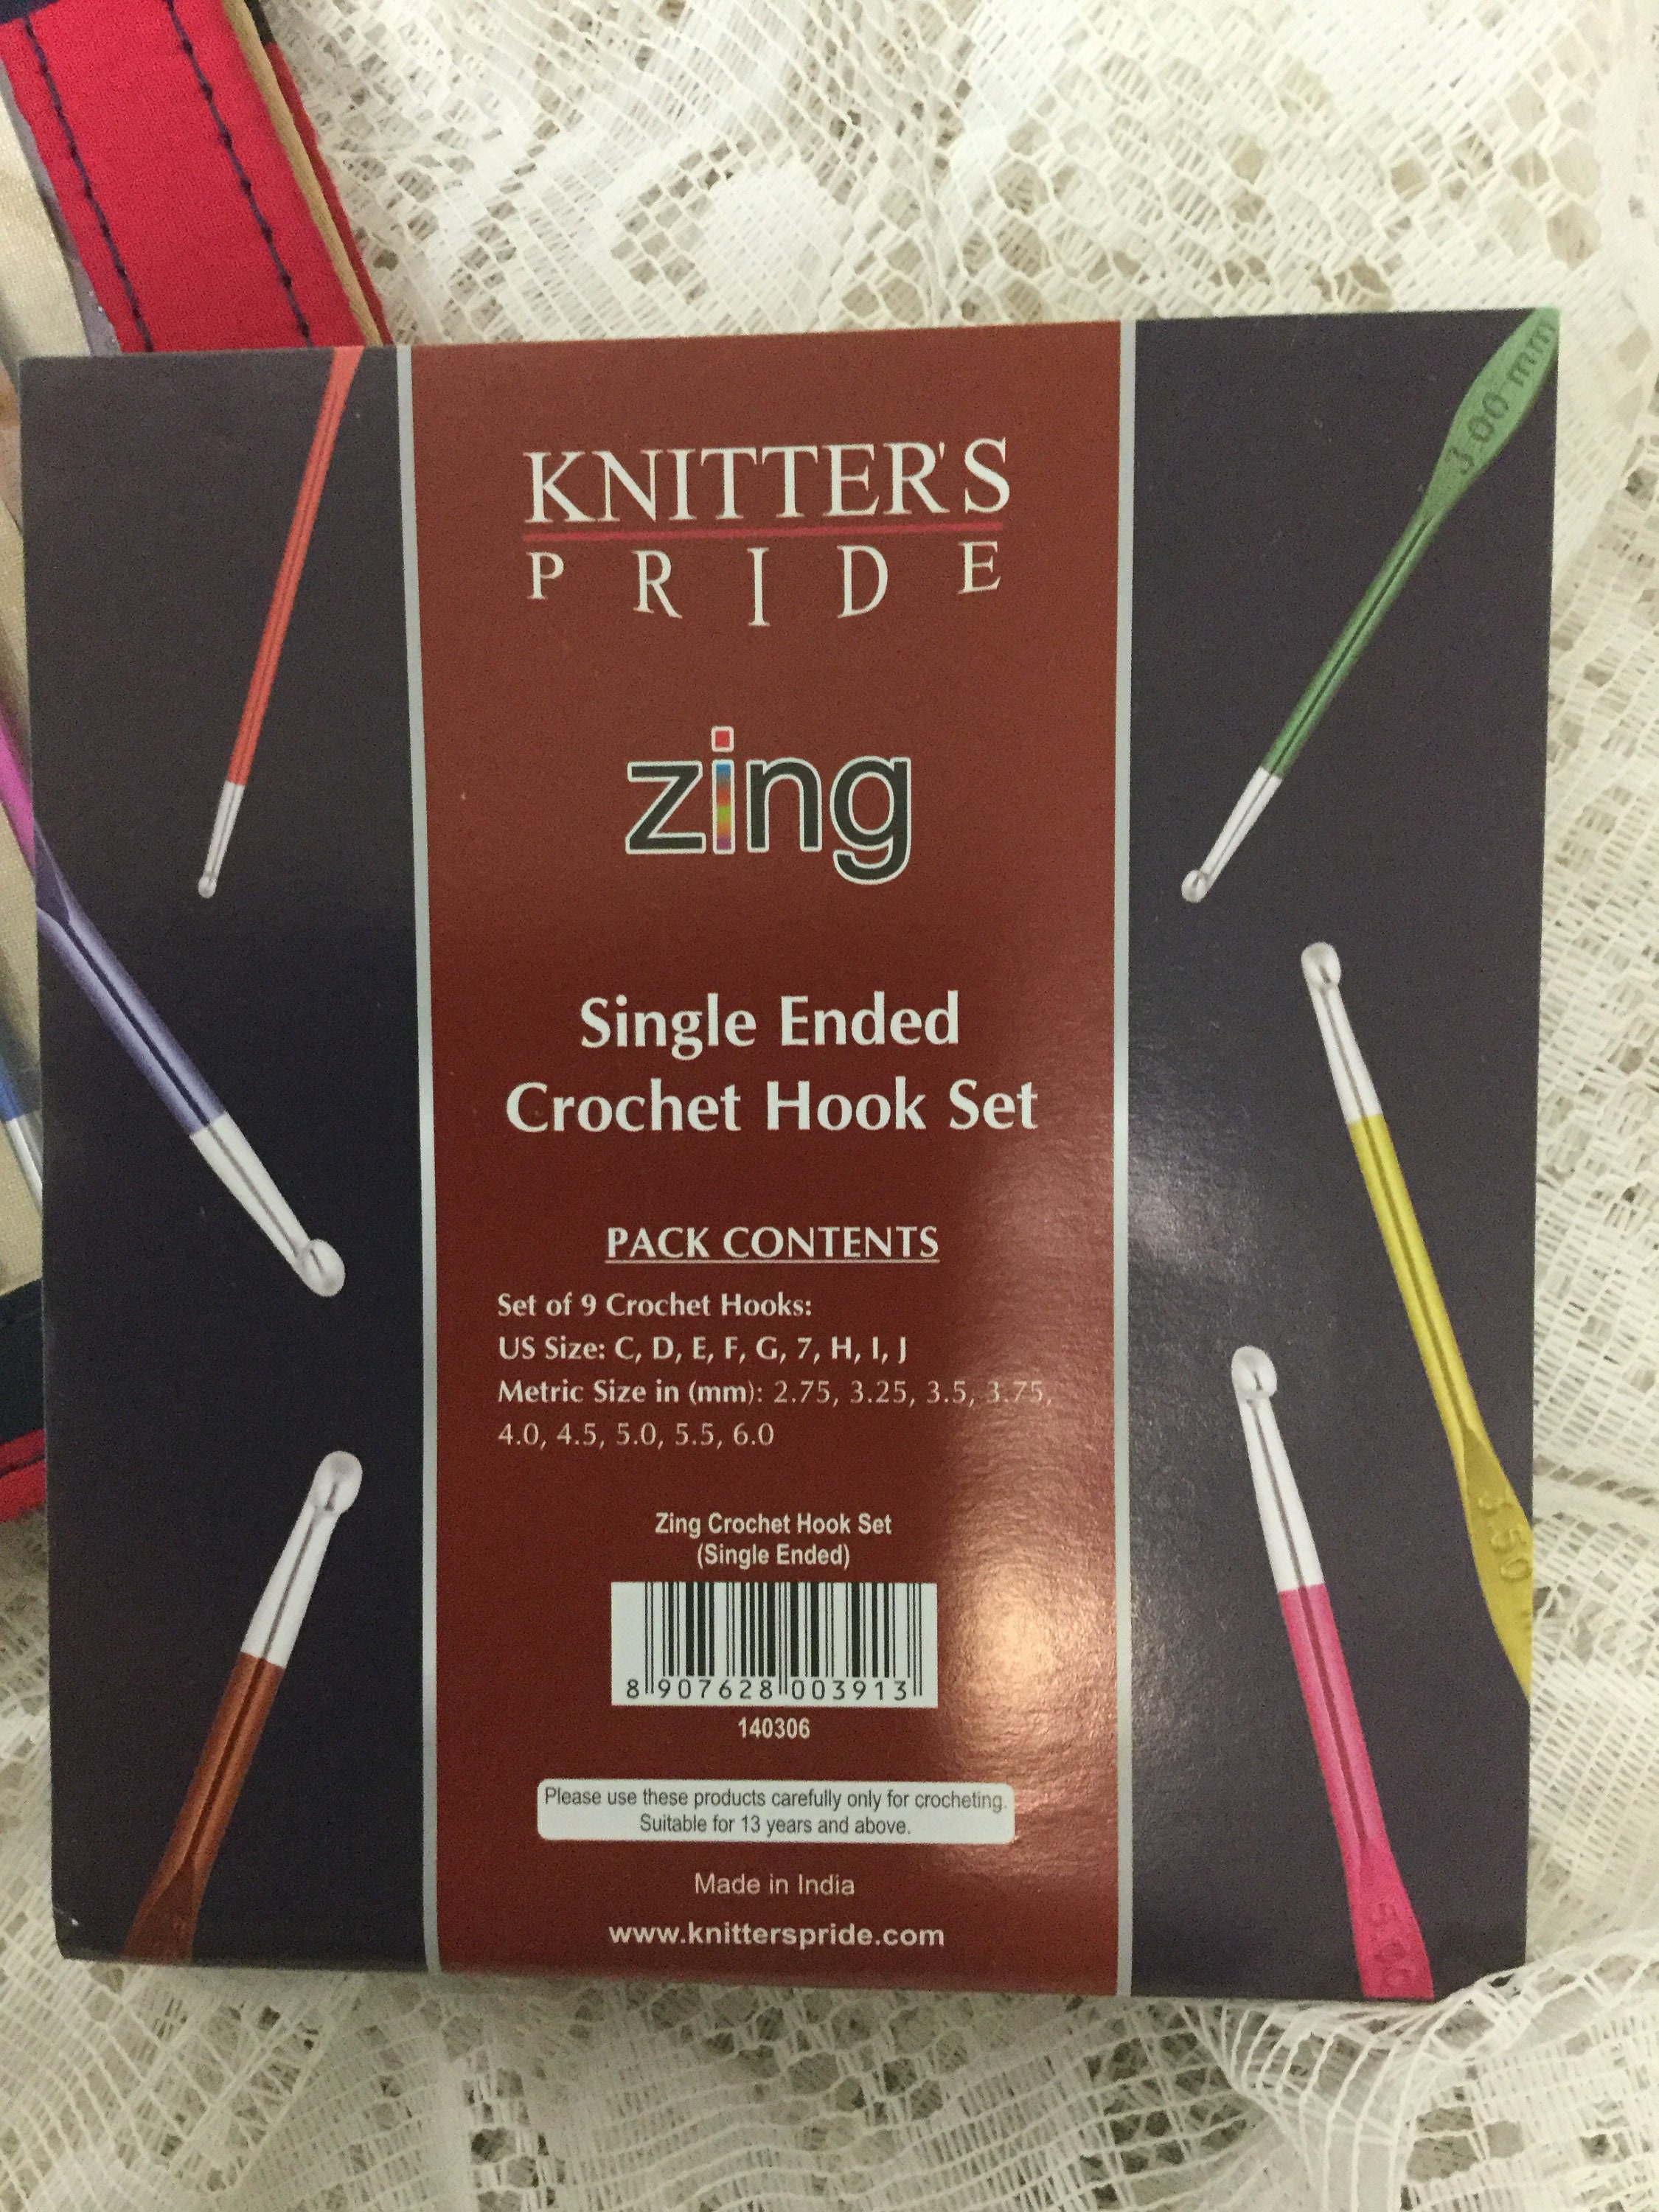 Knitters Pride - Zing - 6 Single Ended Crochet Hook Set